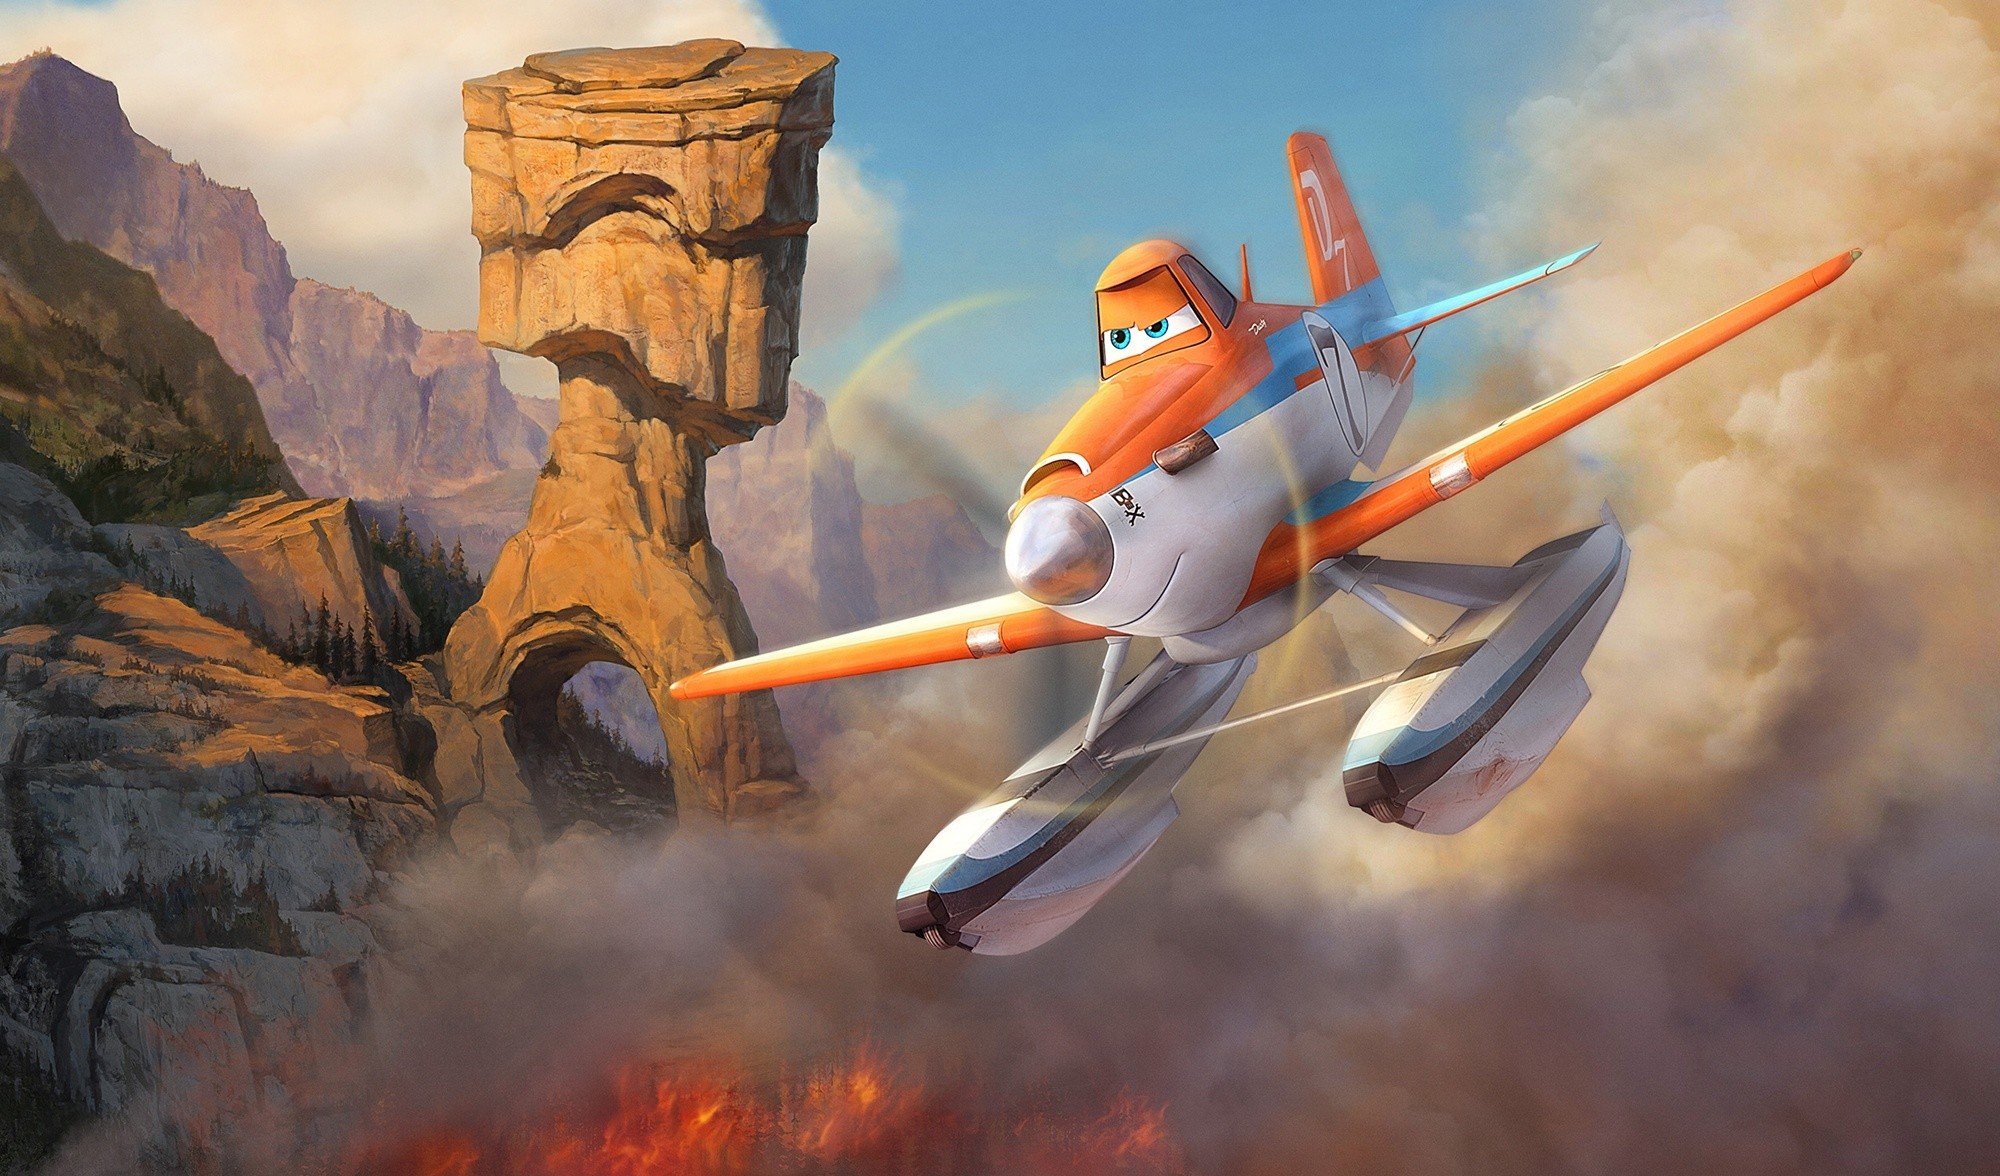 Dusty Crophopper from Walt Disney Pictures' Planes: Fire & Rescue (2014)